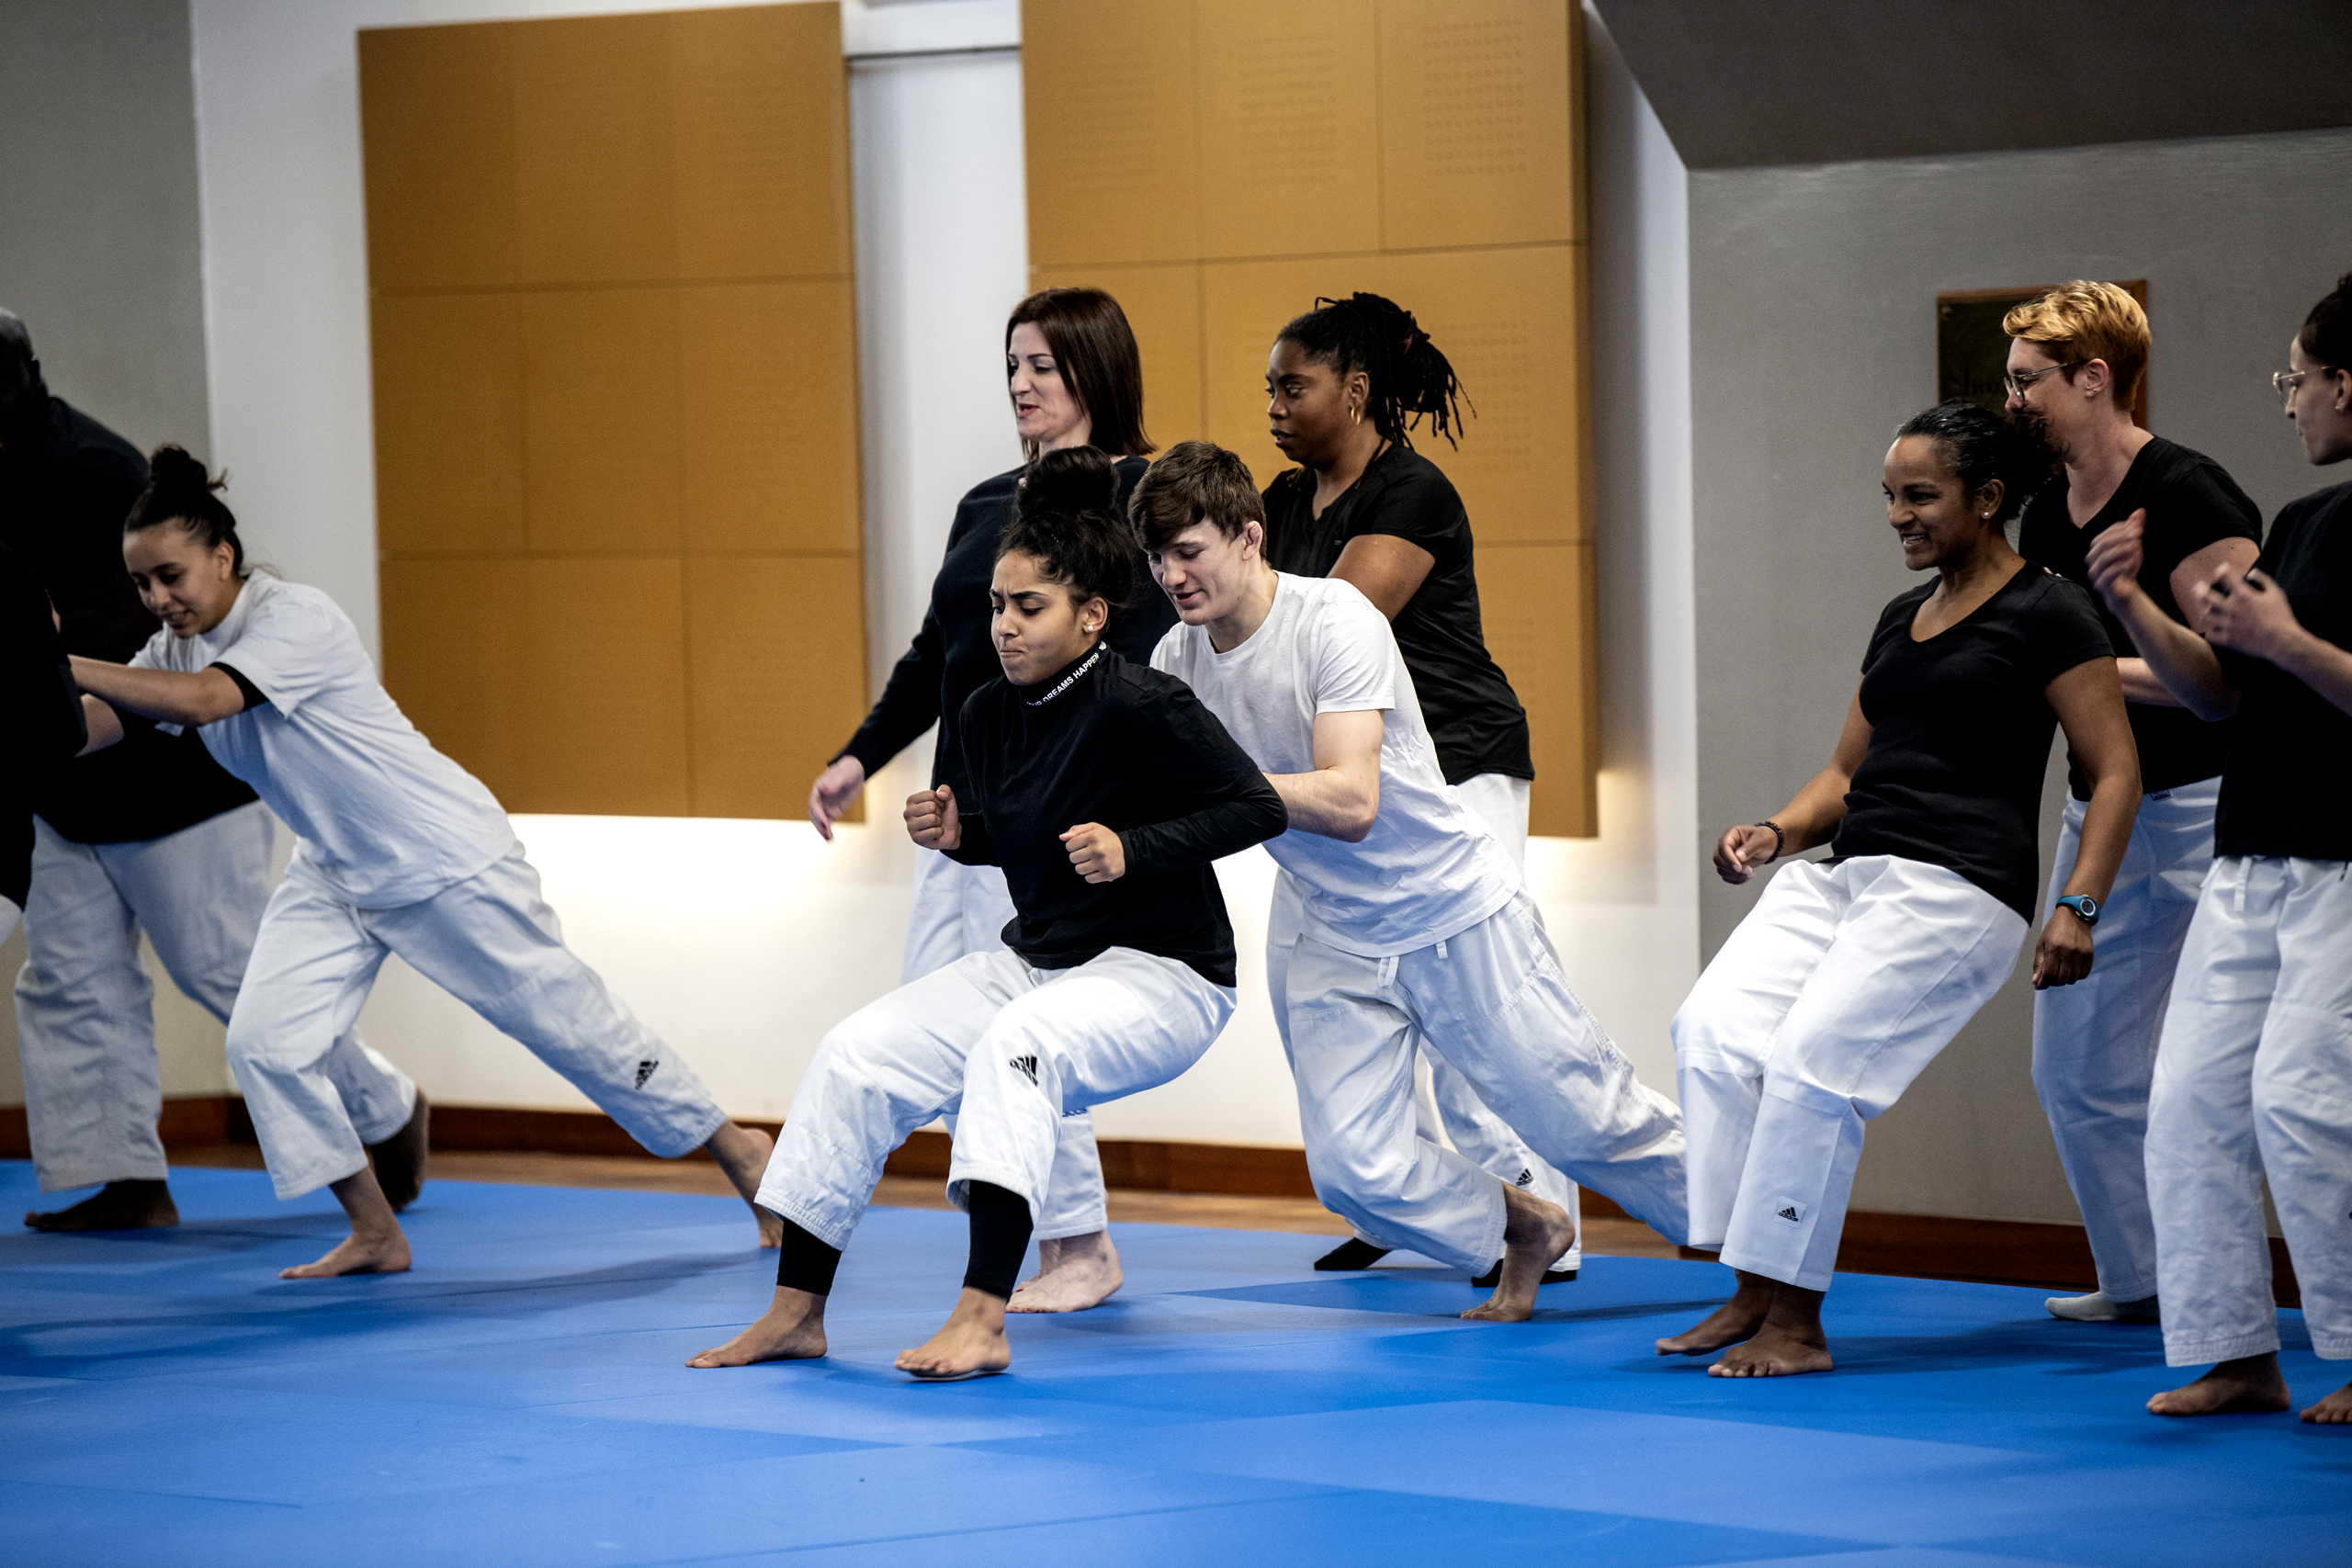 Pratiquants de Taïso en pantalon de judogi blanc et tee-shirt noir en plein exercice en binôme.